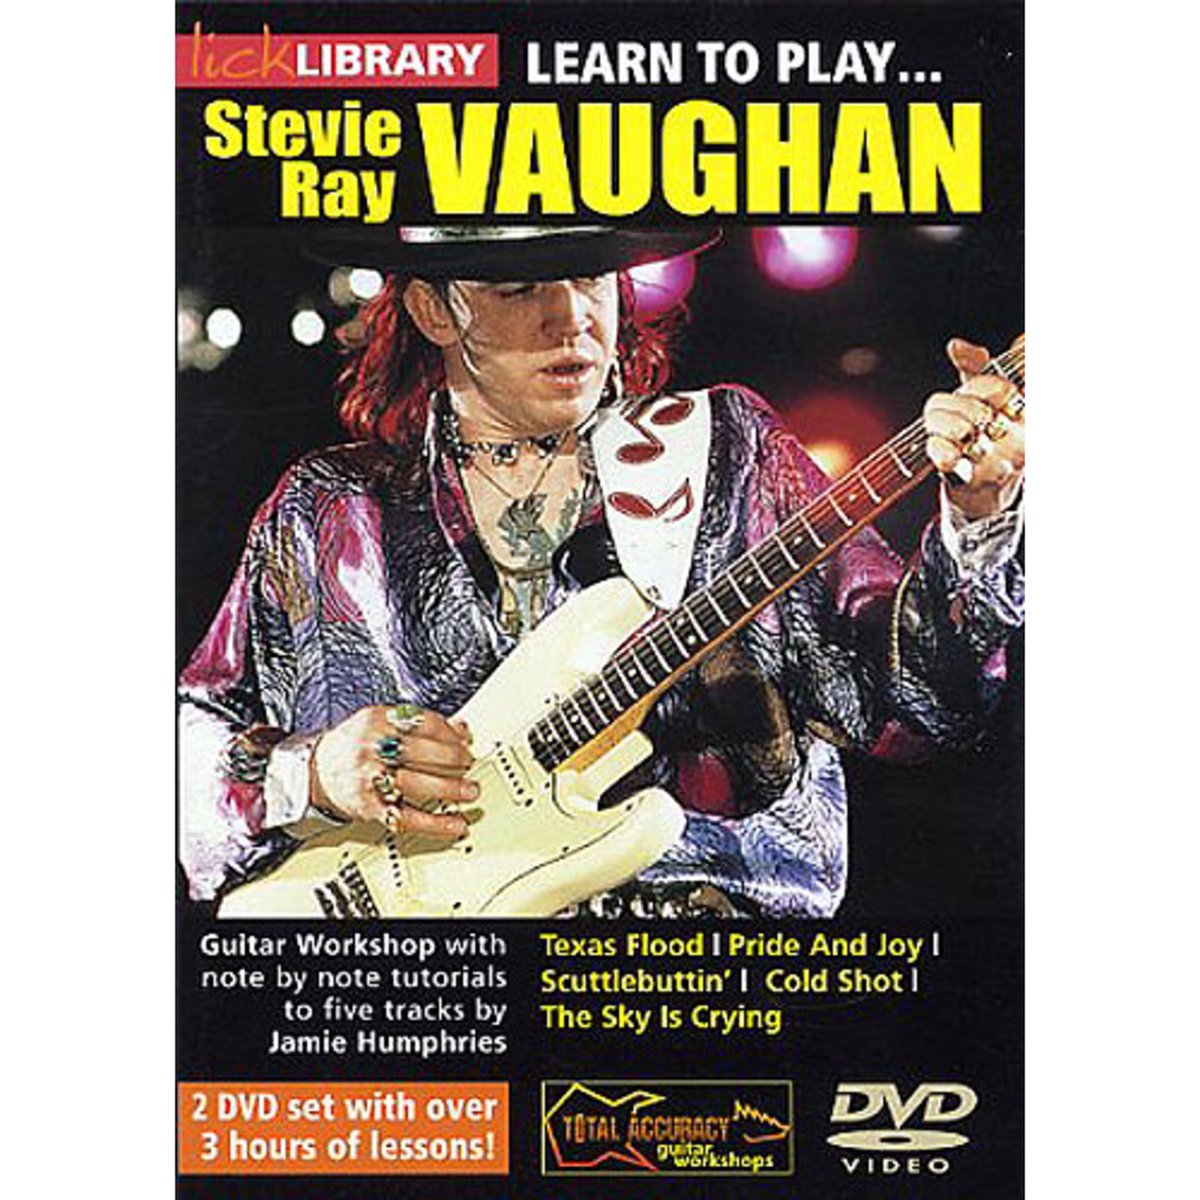 Roadrock International Lick Library - S.R. Vaughan Learn to play (gitaar), DVD - DVD / CD / Multimedia: Q - Z